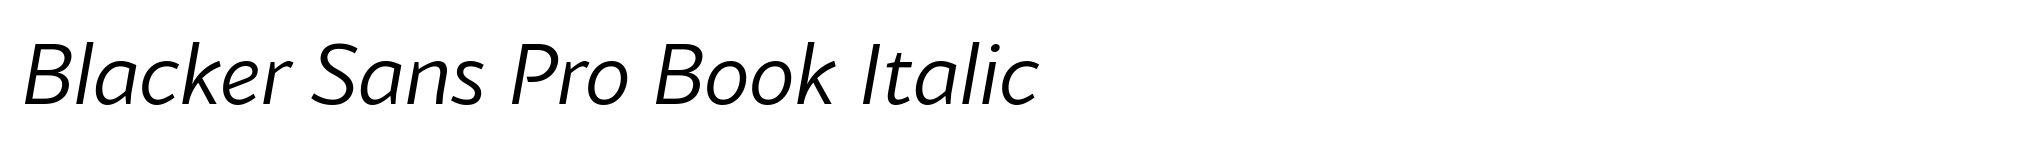 Blacker Sans Pro Book Italic image